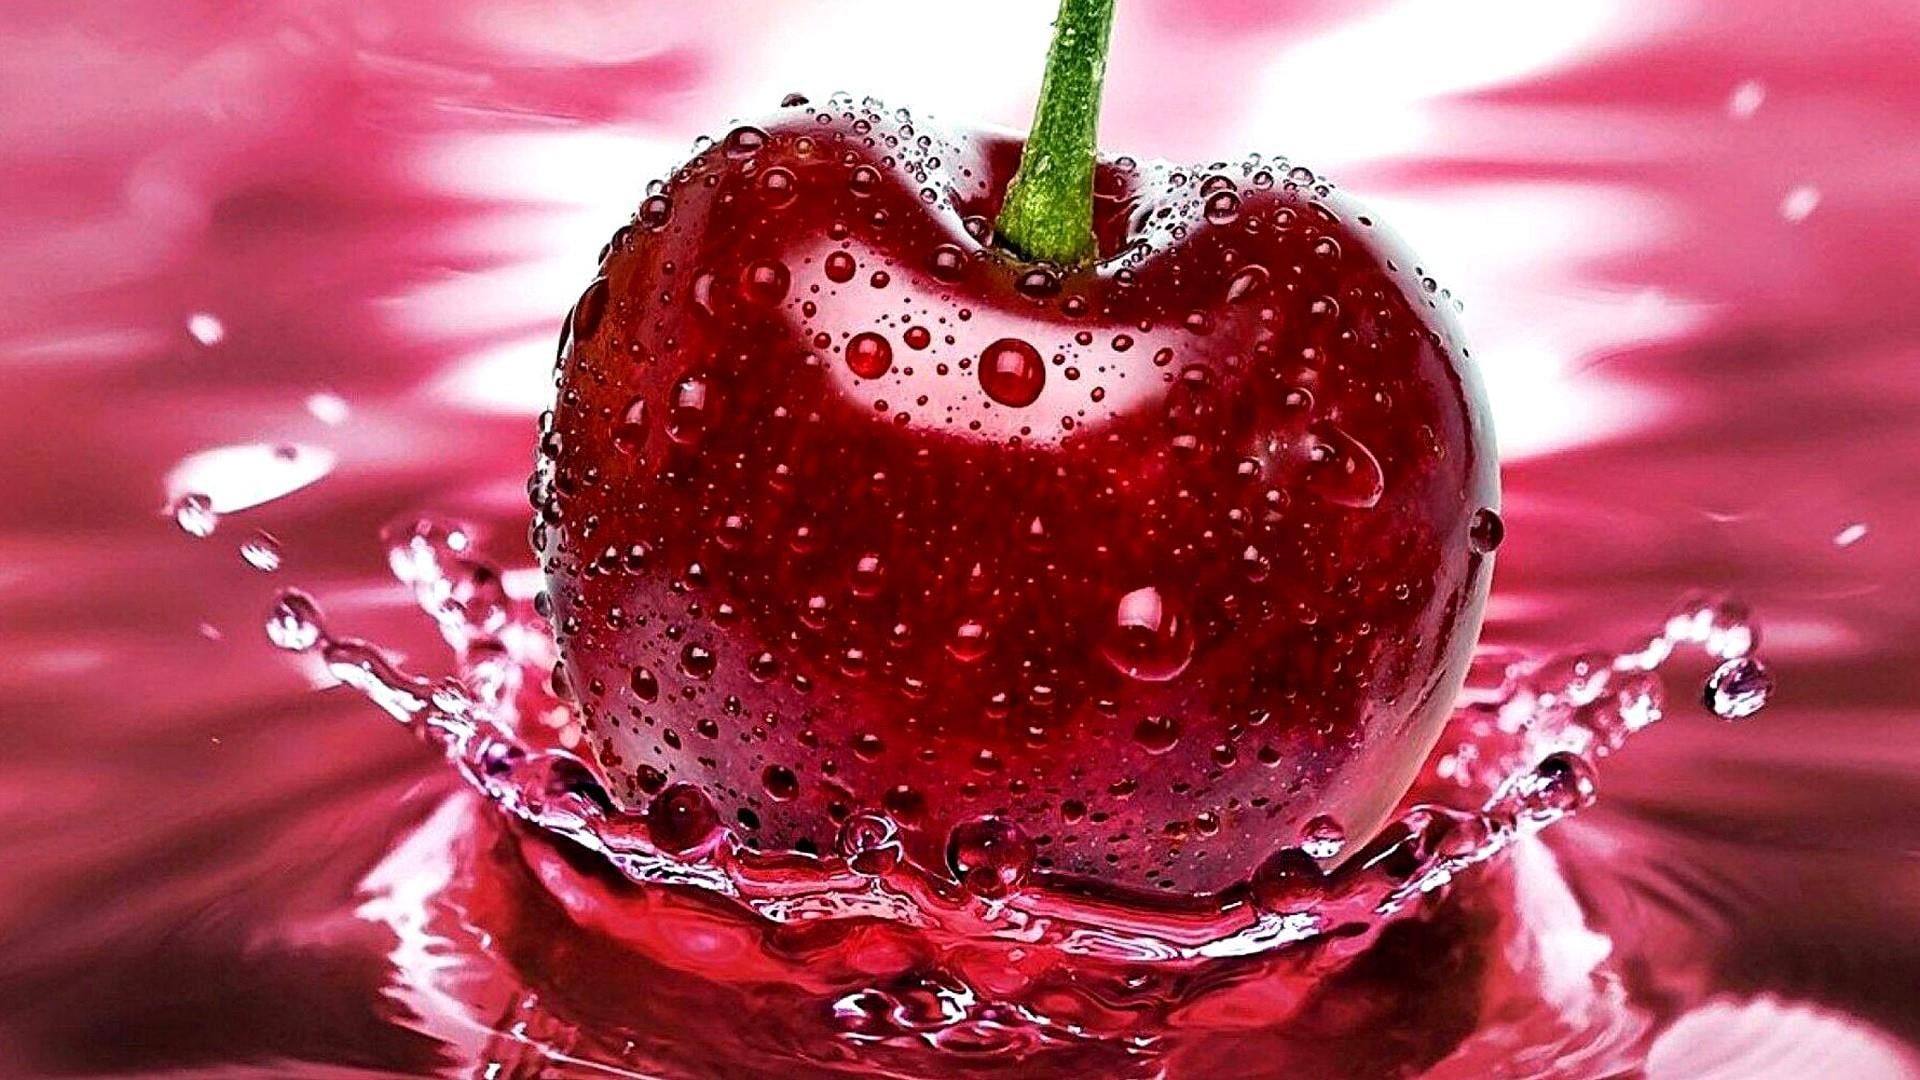 fresh #cherry #splash #water water drops #droplets #fruit #vitamin #photography macro photography #drop P #wallpaper. Fruit splash, Fruit wallpaper, Fruit